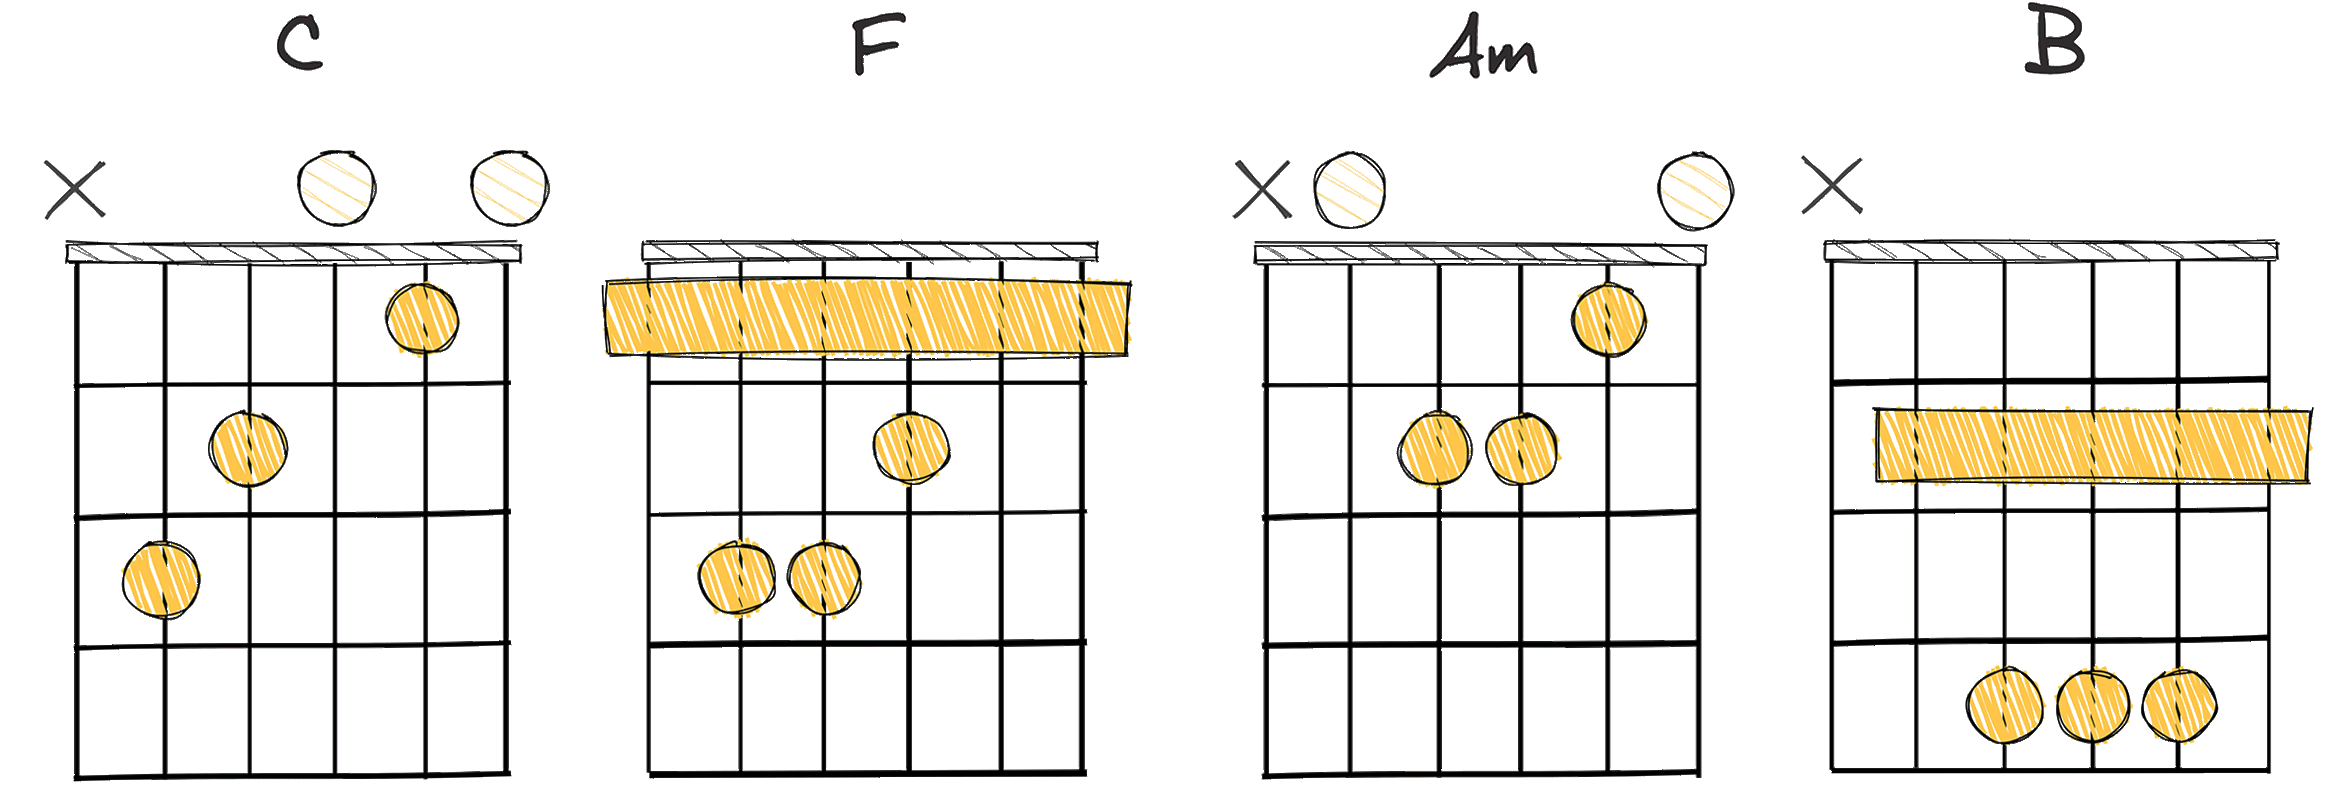 I-IV-vi-VII (1-4-6-7) chords diagram